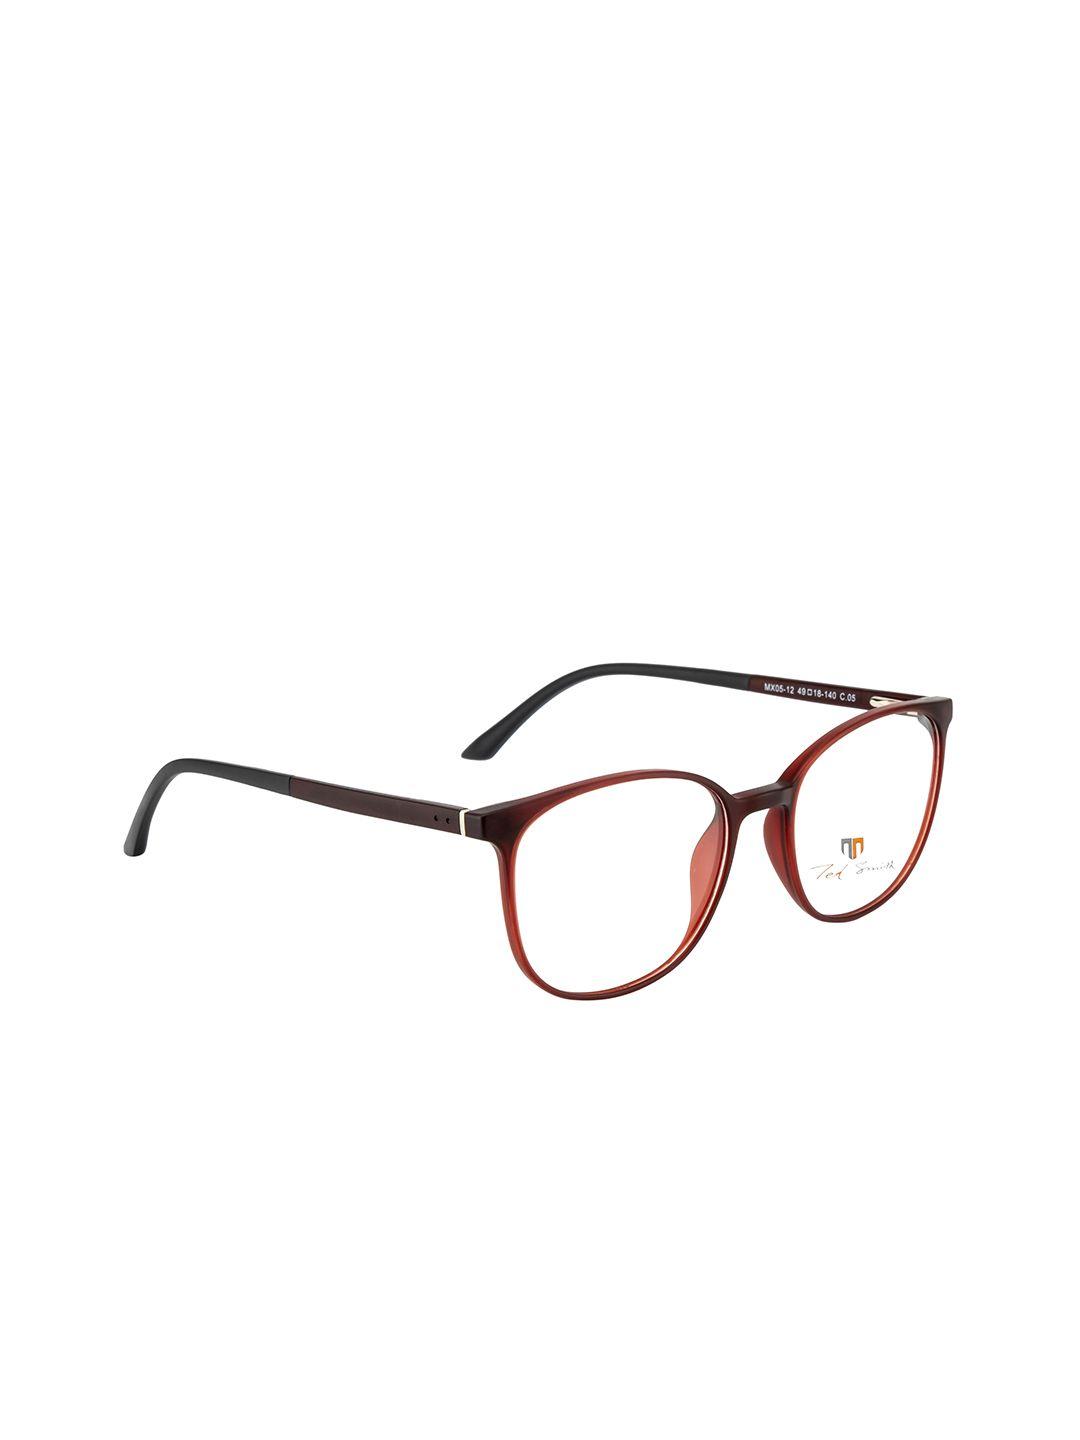 ted smith unisex transparent & maroon full rim round frames eyeglasses